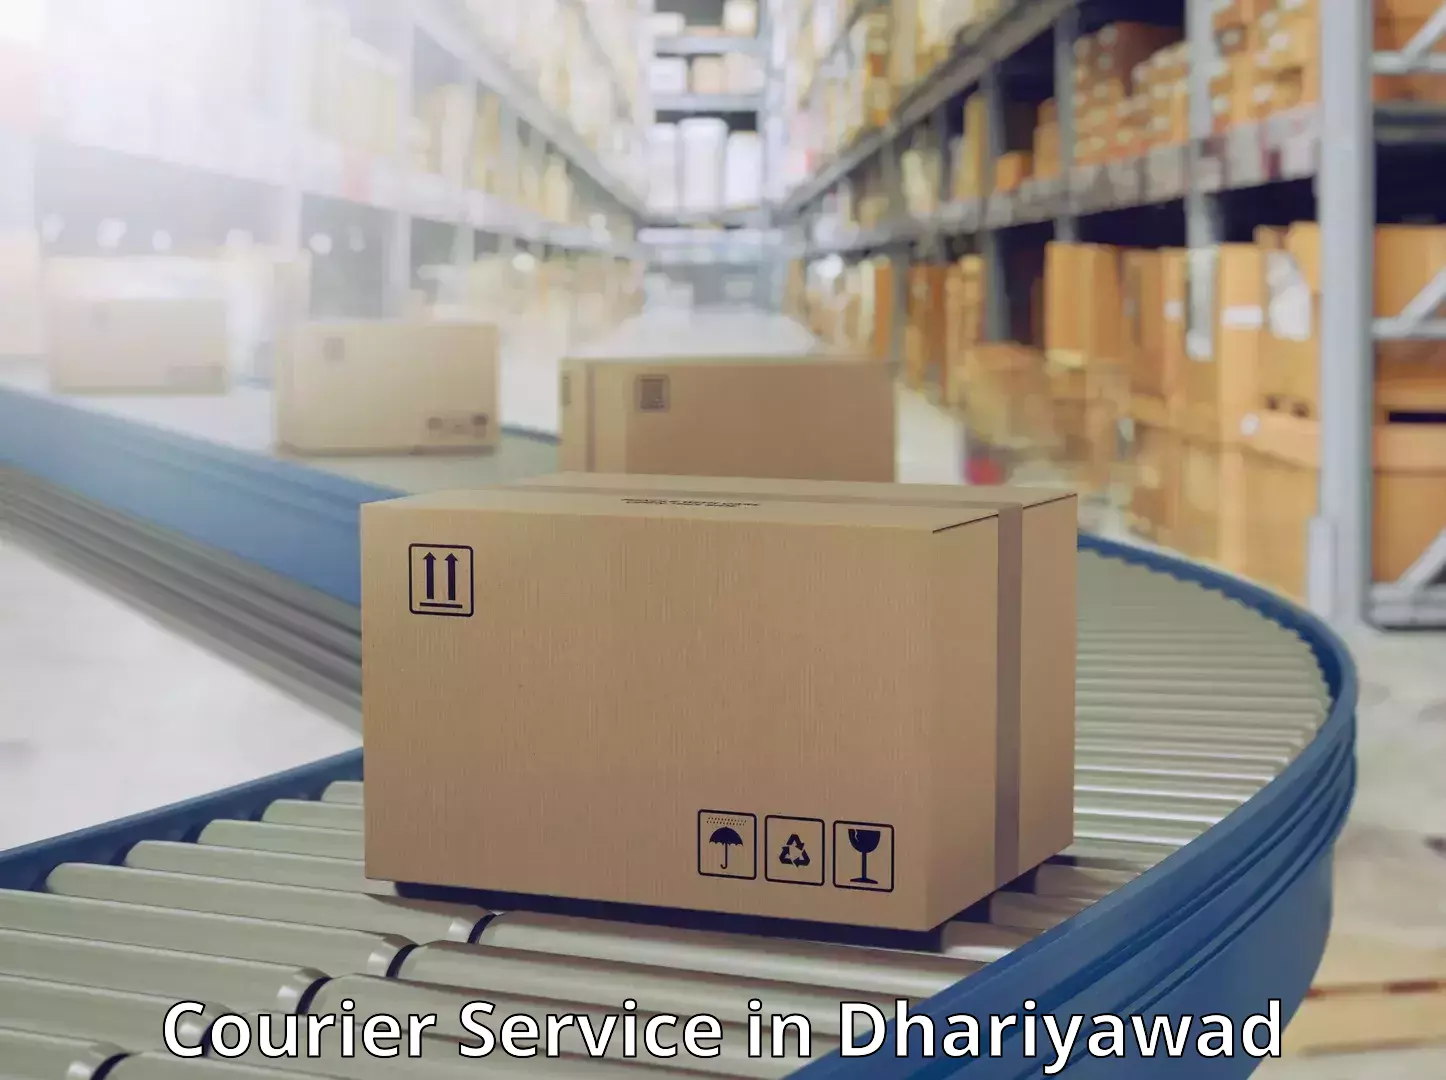 On-demand delivery in Dhariyawad